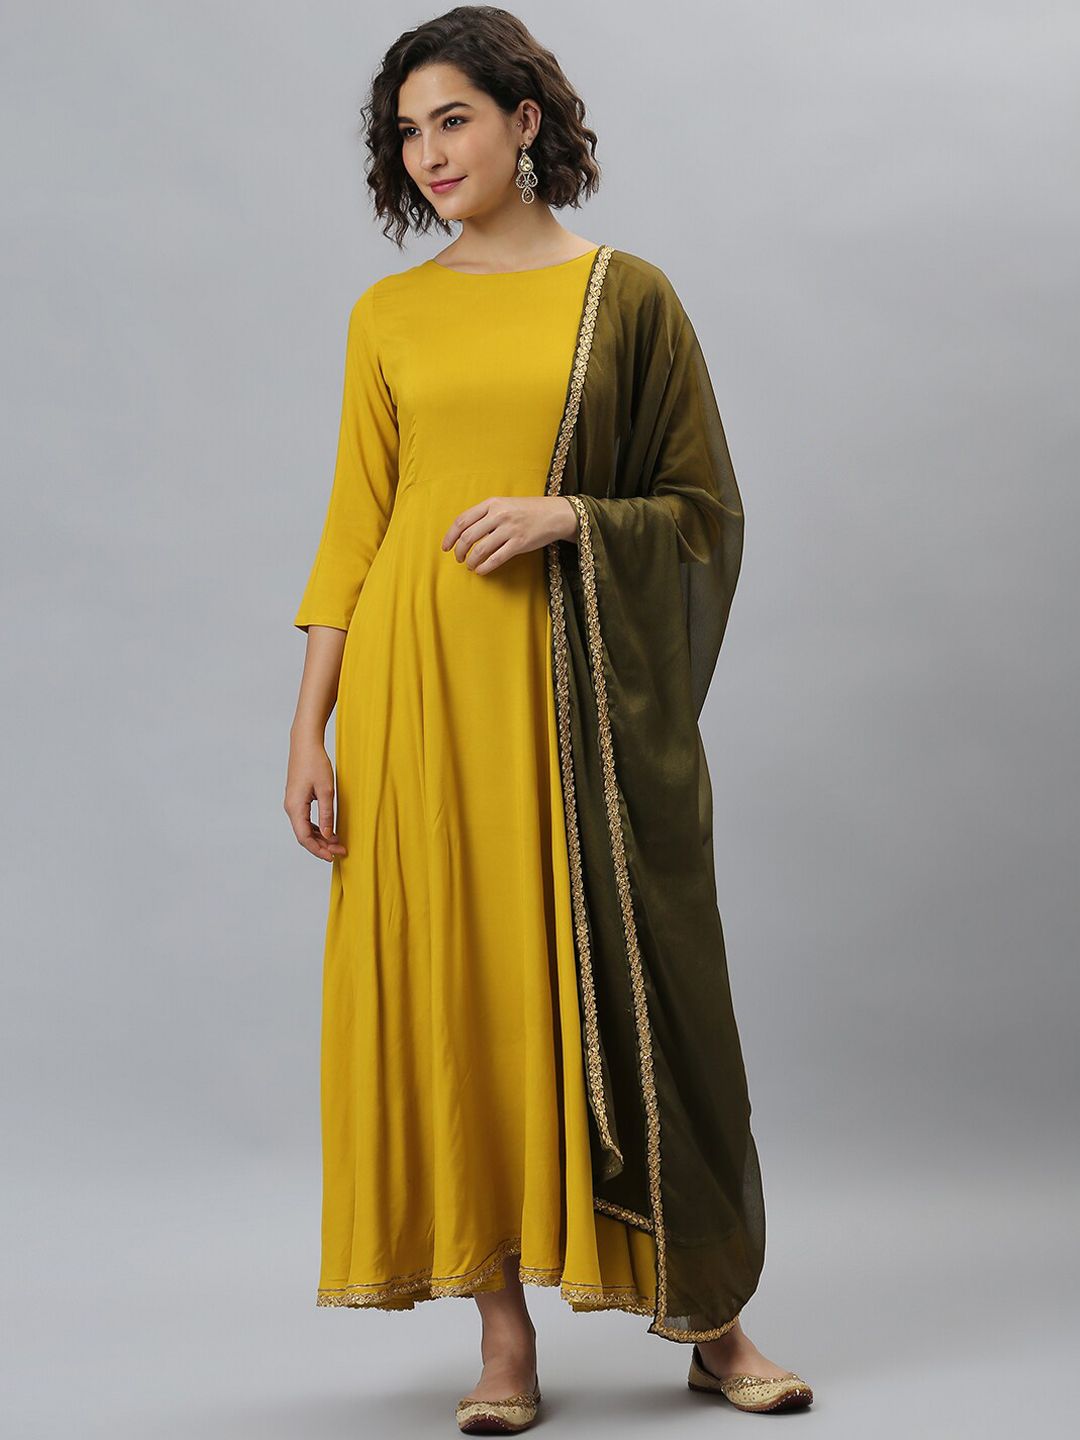 Janasya Mustard Yellow & Olive Green Liva Ethnic Midi Dress with Dupatta Price in India